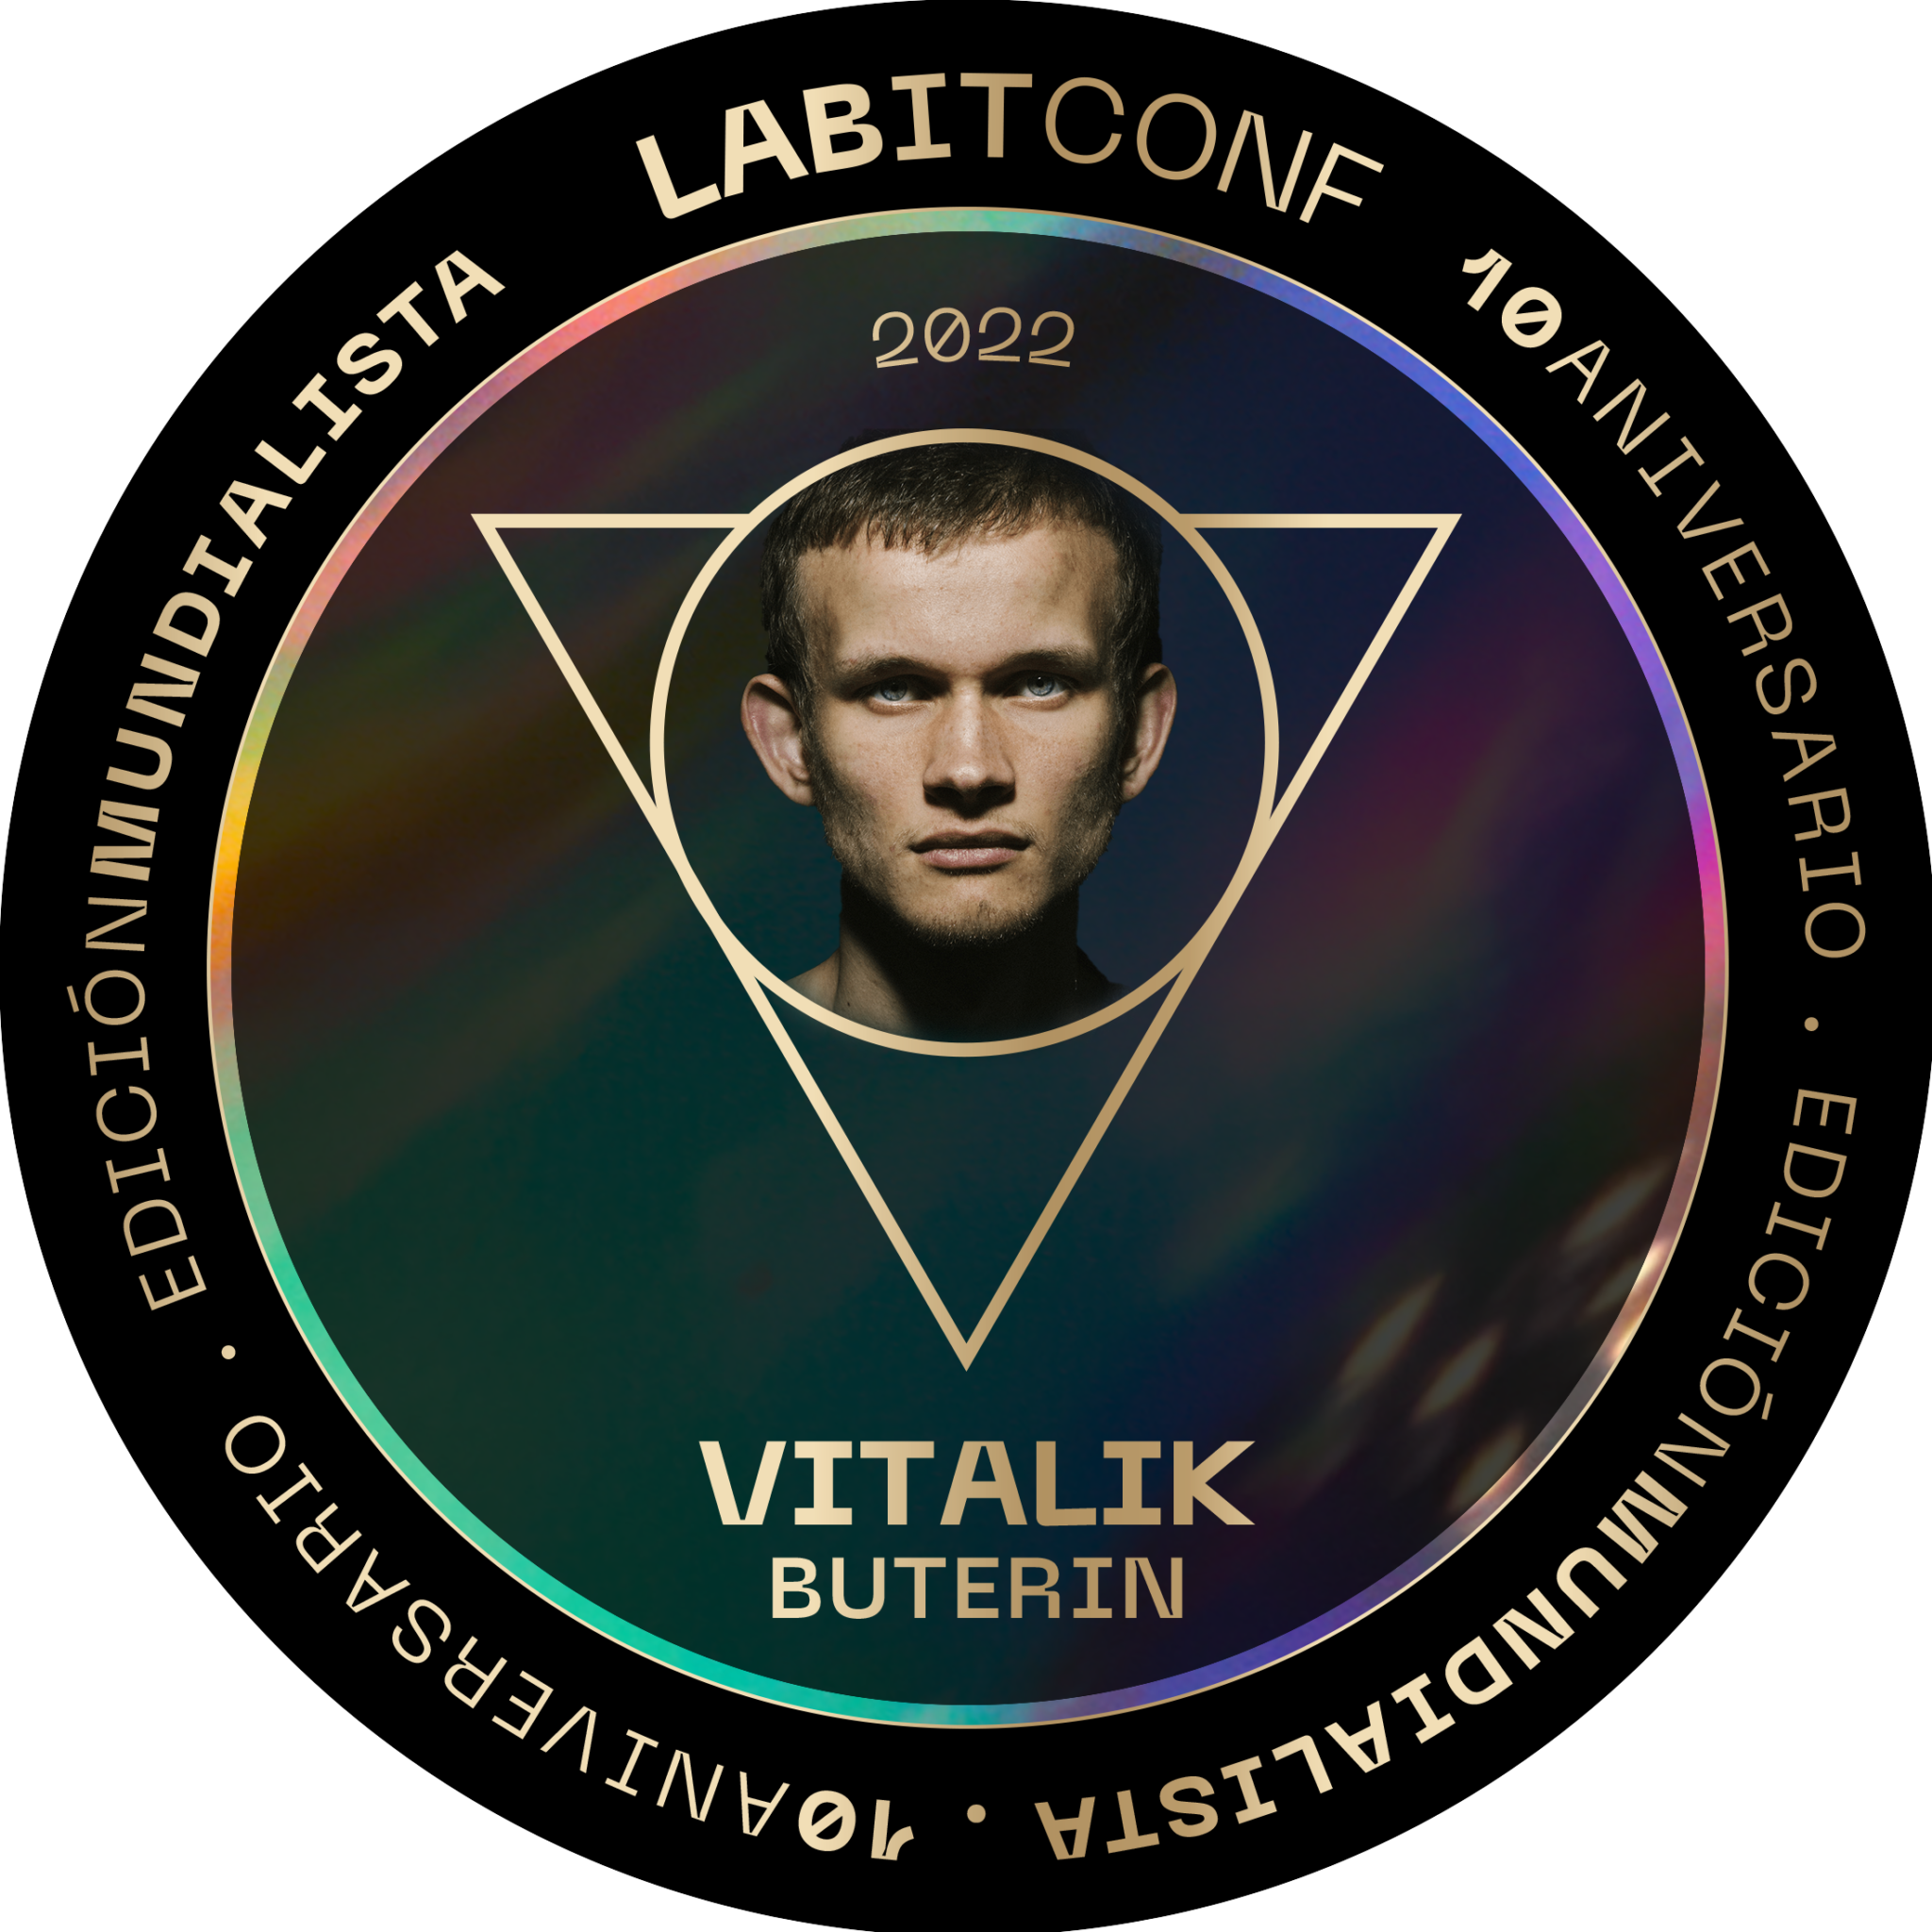 vitalik-buterin-labitconf-2022-ba-2022-logo-1667838200145